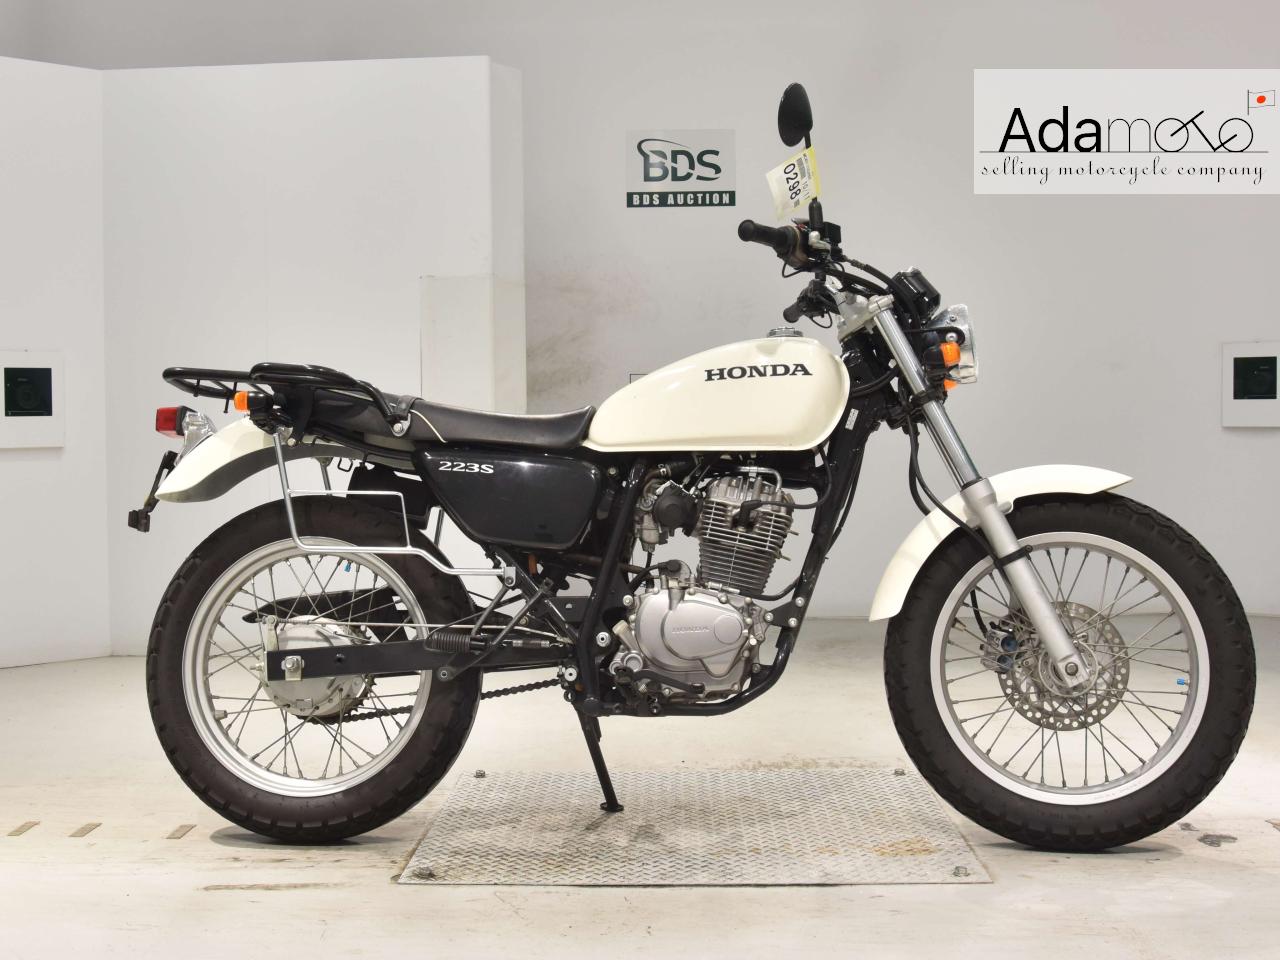 Honda CB223S - Adamoto - Motorcycles from Japan